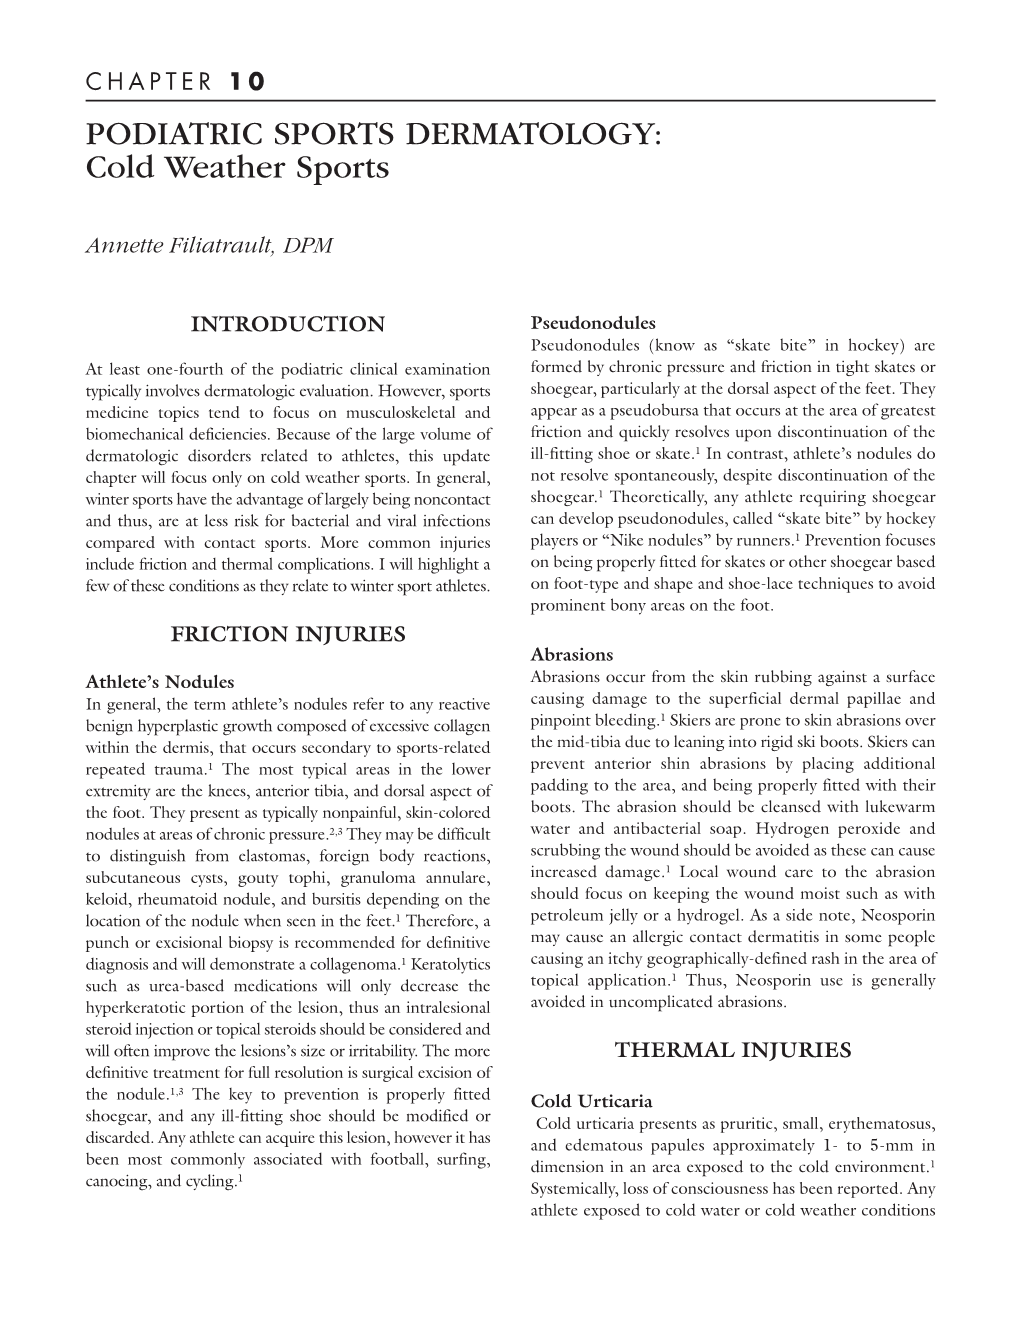 PODIATRIC SPORTS DERMATOLOGY: Cold Weather Sports